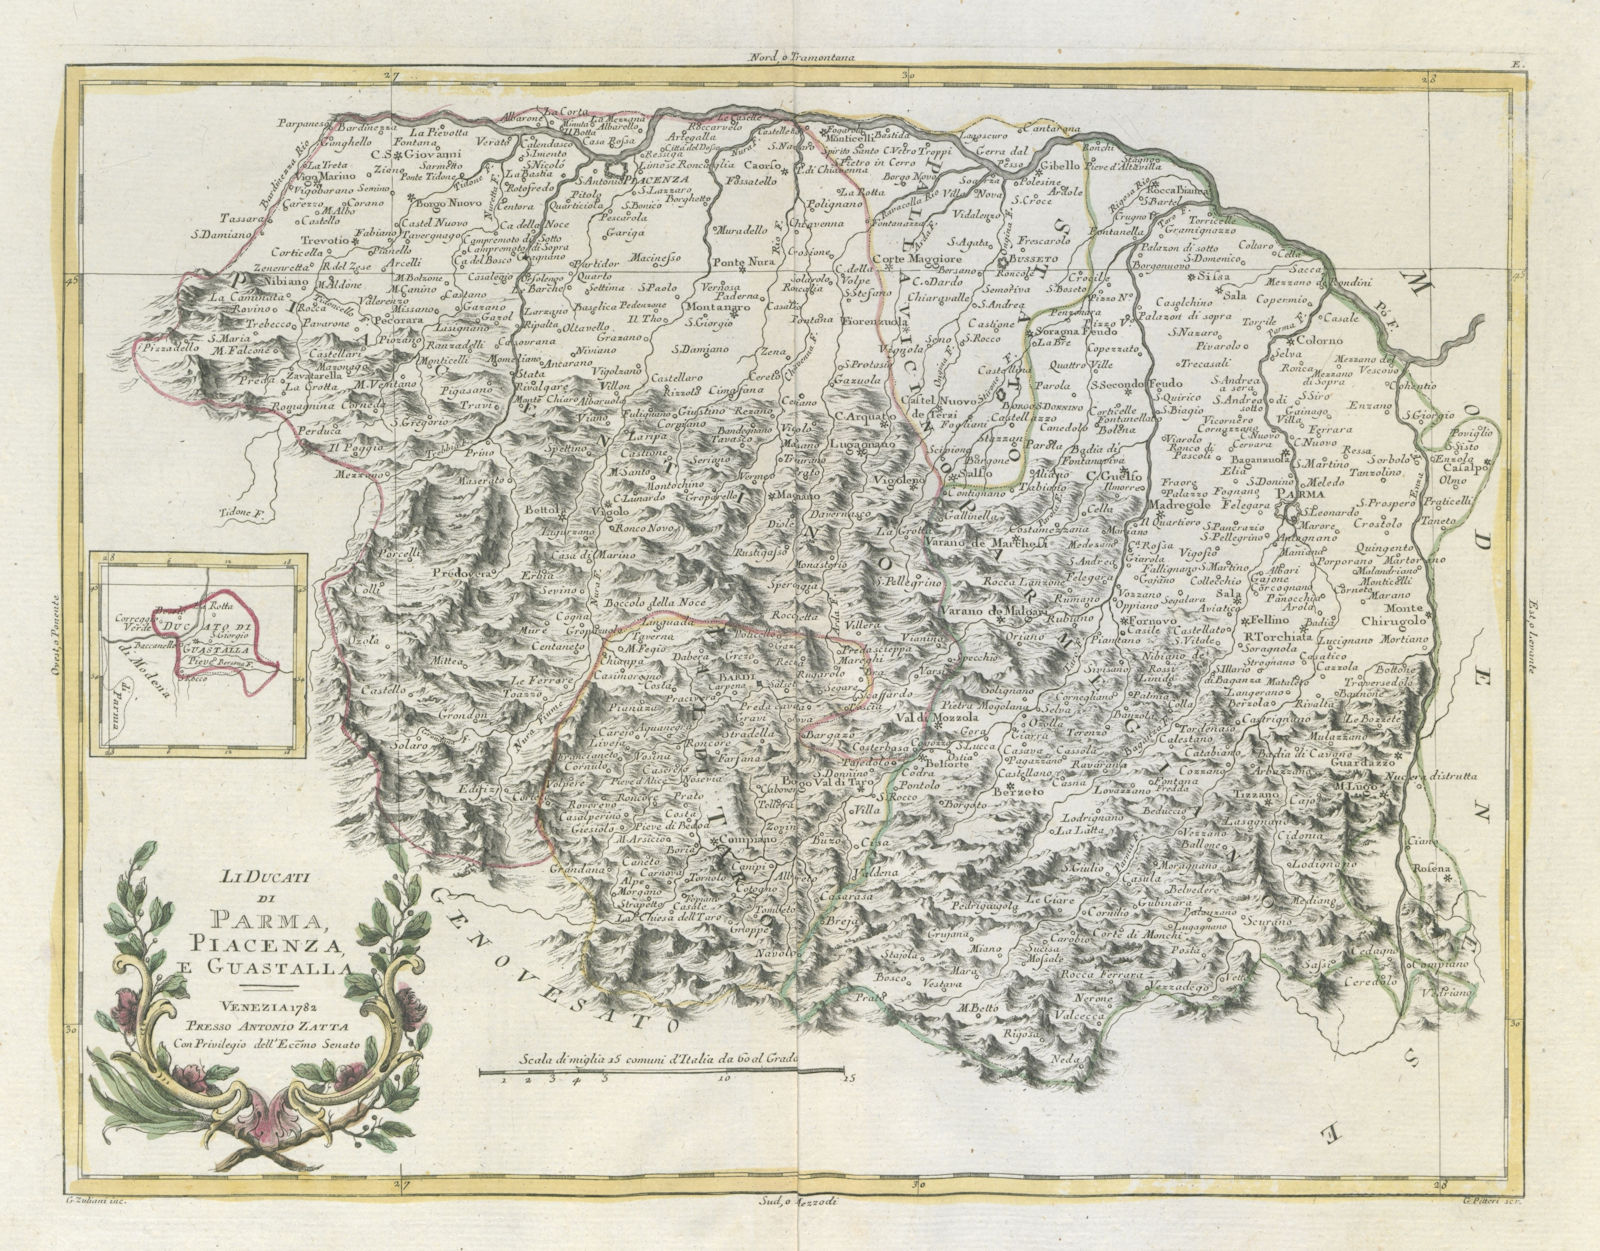 "Li Ducati di Parma, Piacenza e Guastalla". Emilia-Romagna. ZATTA 1784 old map